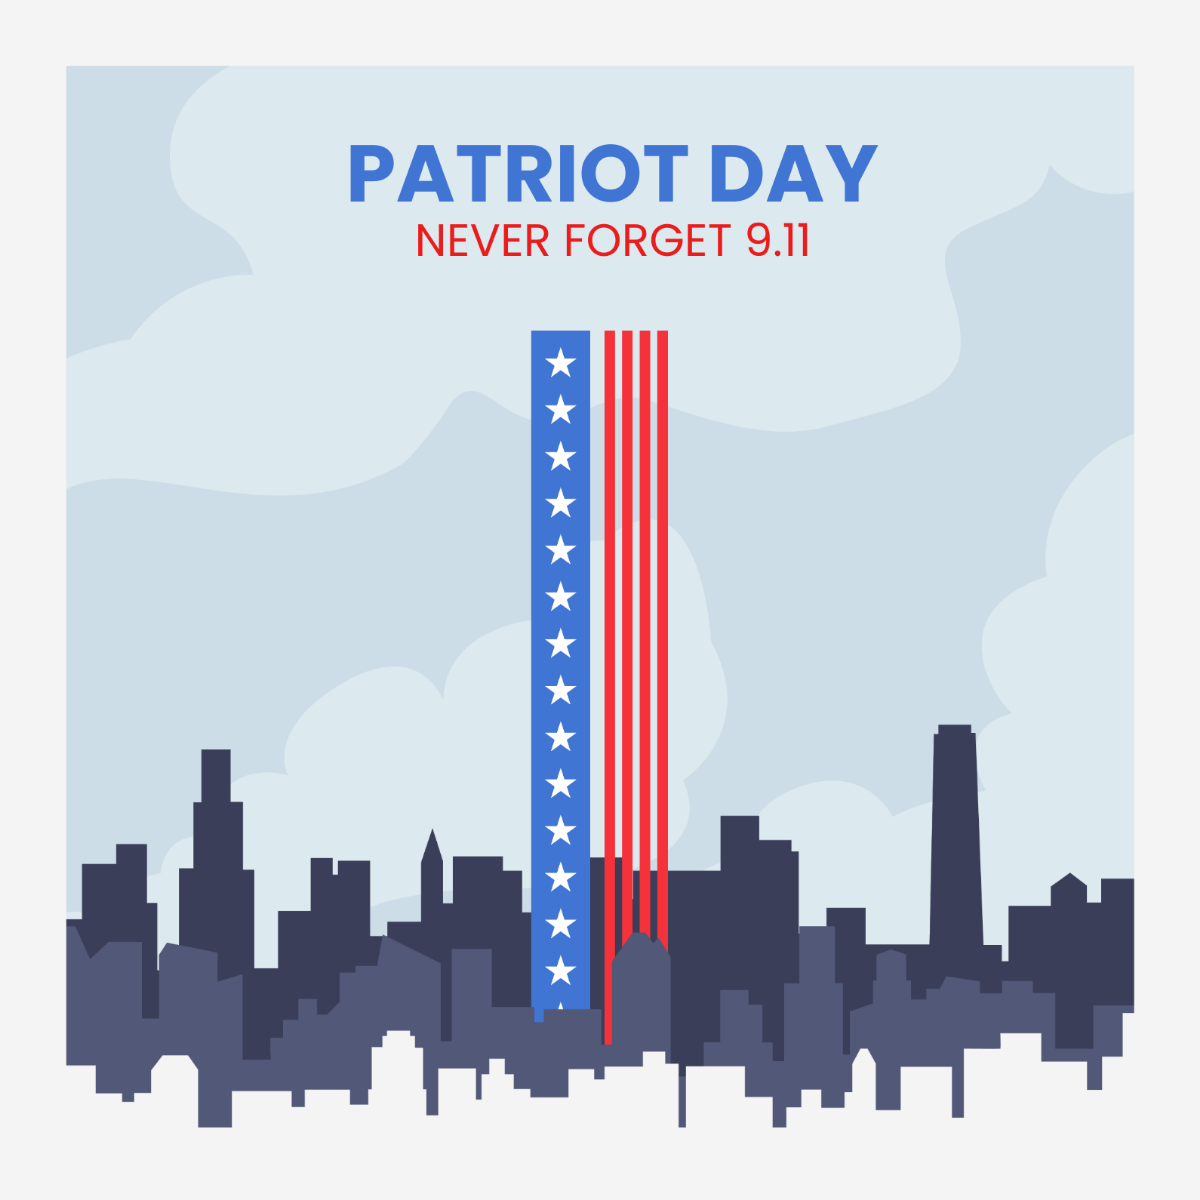 Patriot Day LinkedIn Post Template